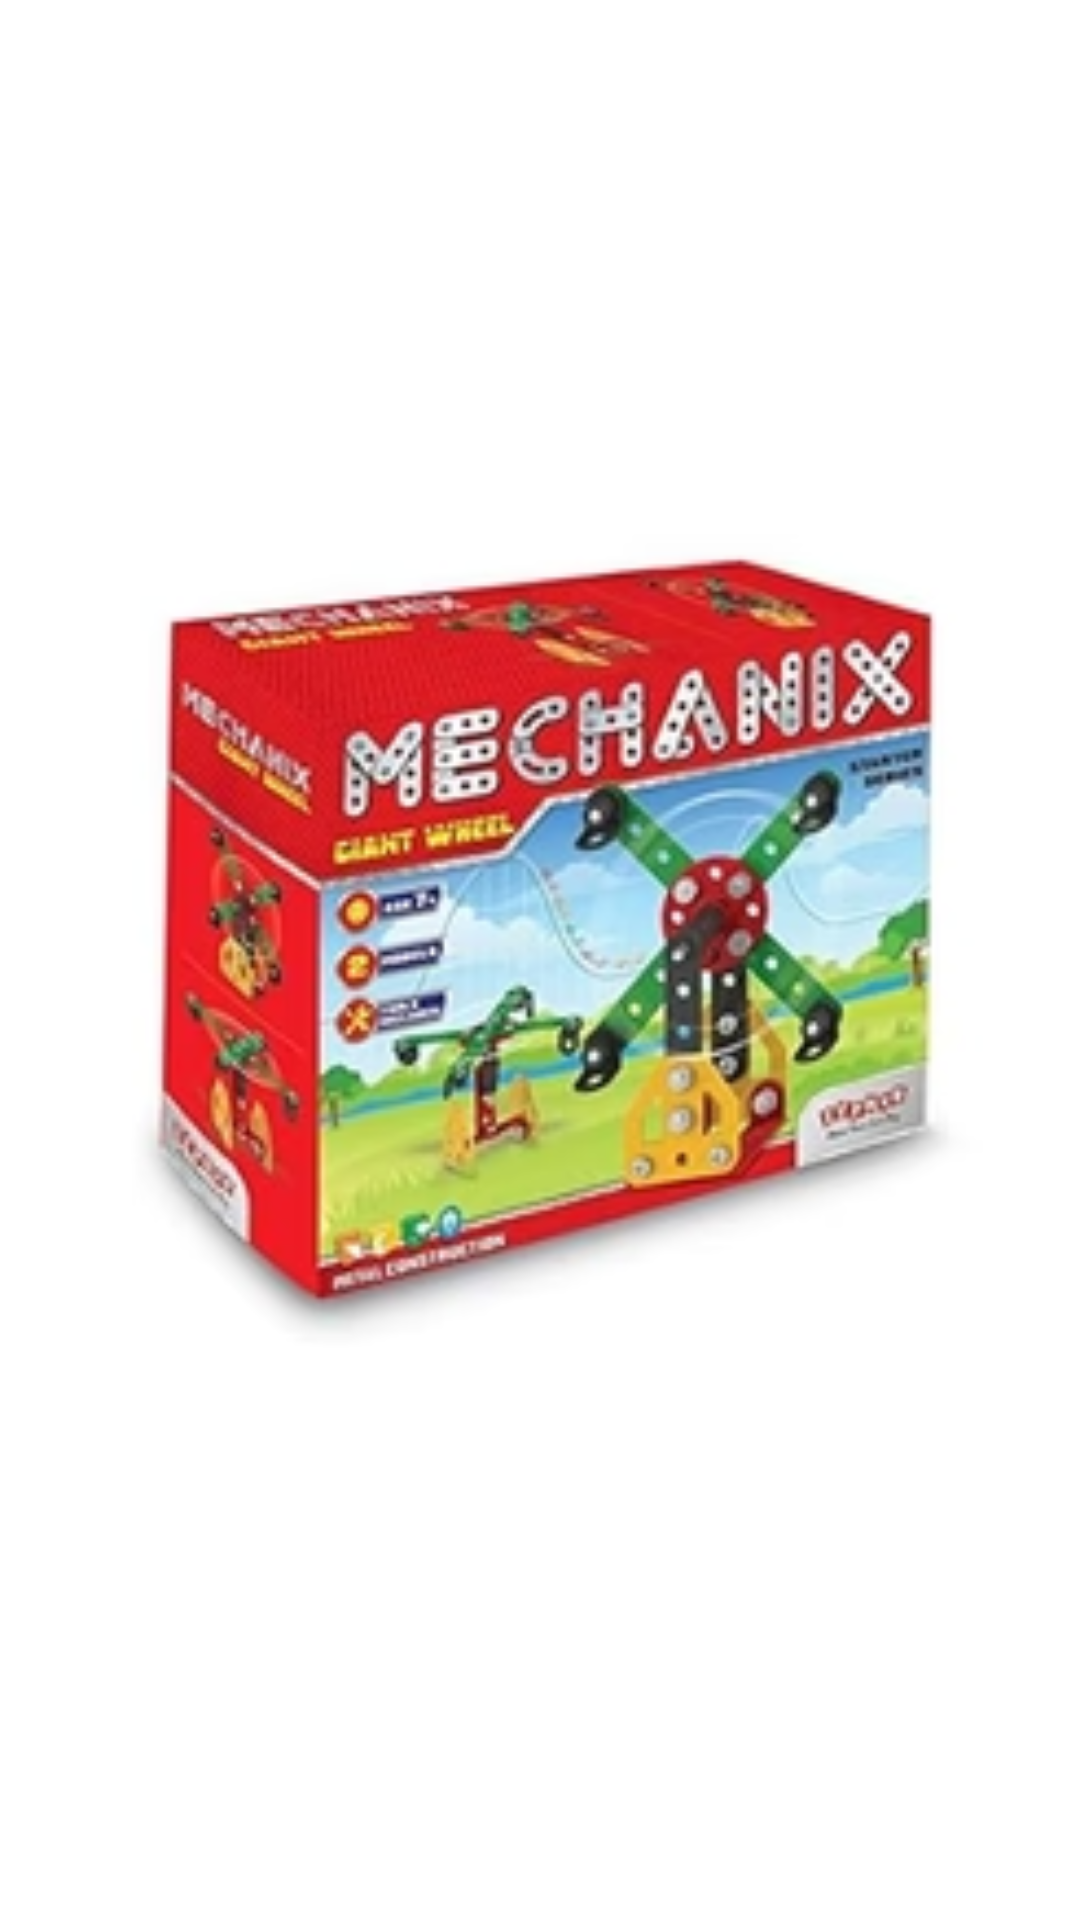 Zephyr Mechanix Giant Wheel, DIY Stem and Education Metal Construction Set